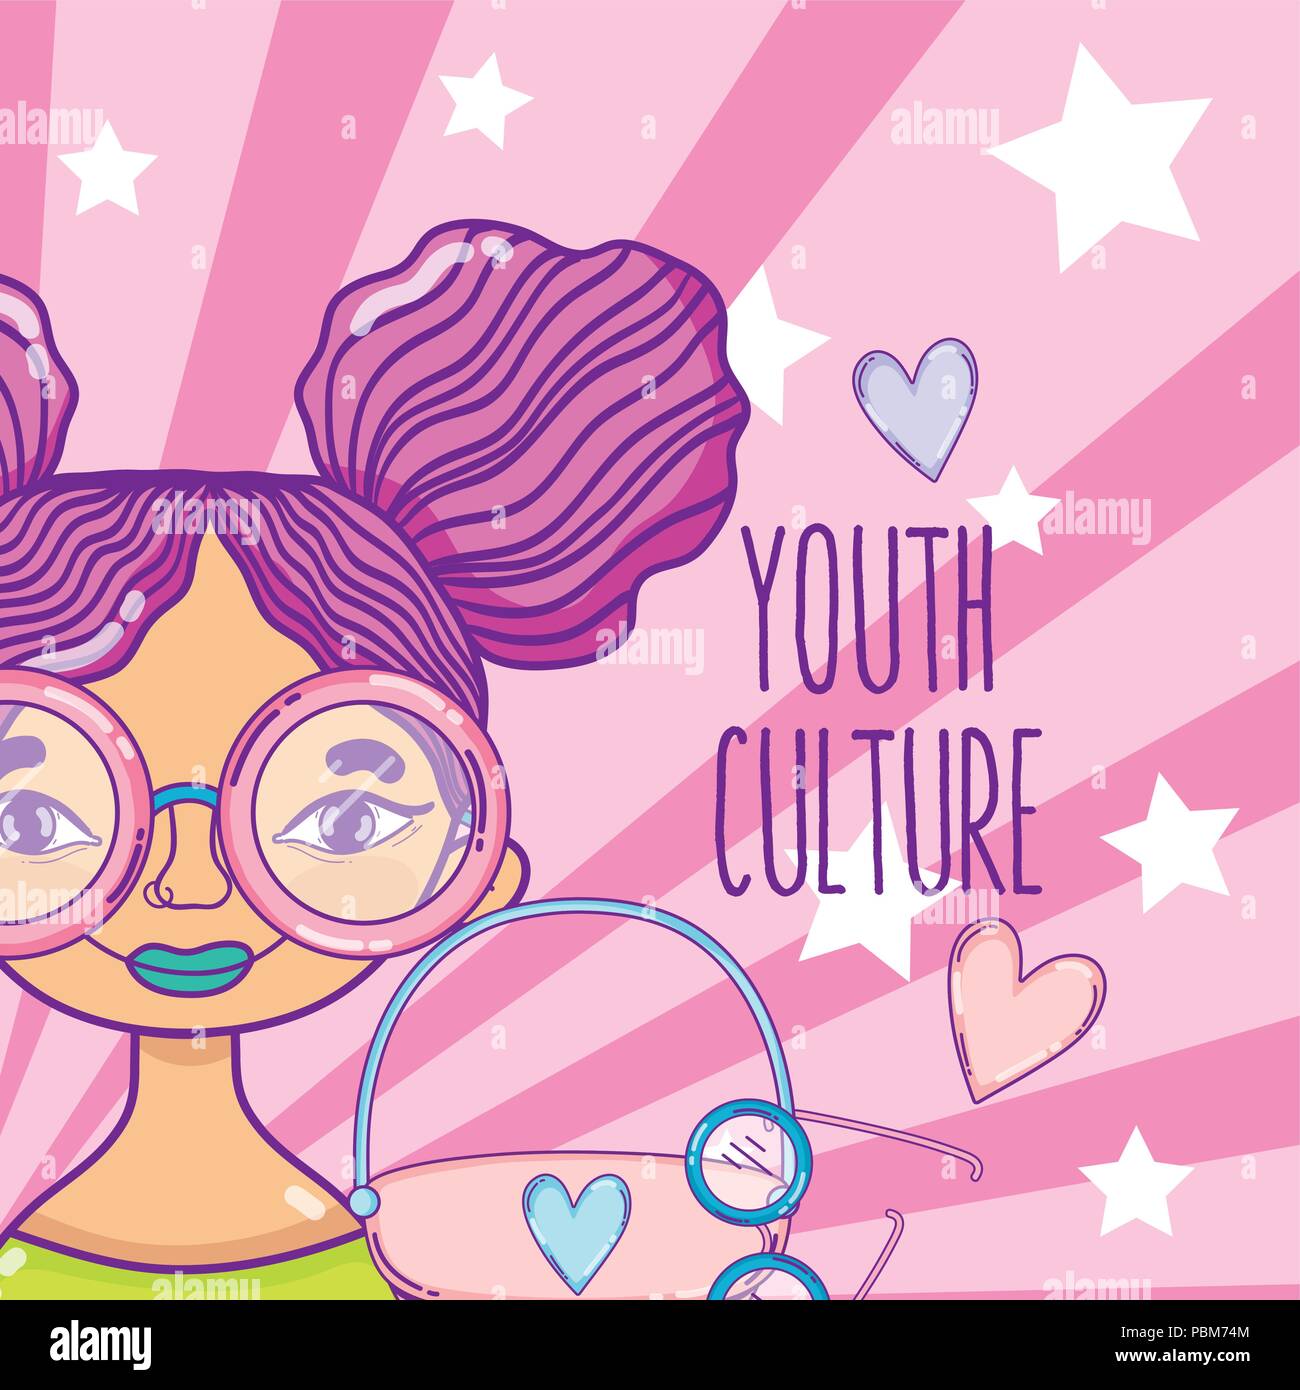 Youth culture cartoon Stock Vector